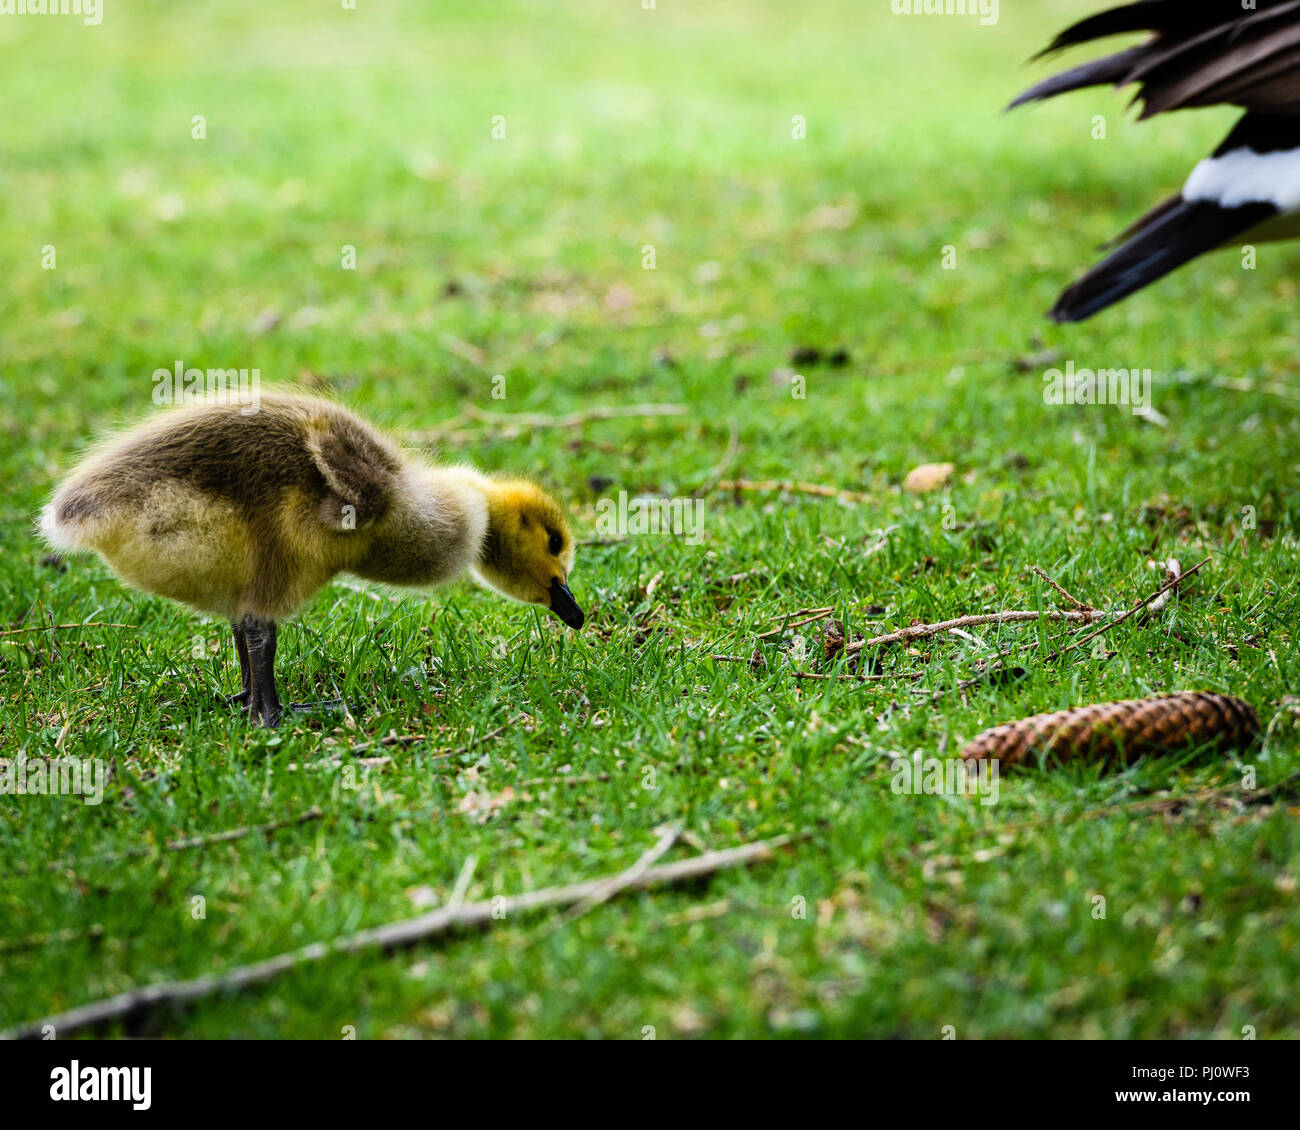 Baby Canada Goose Gosling Grazing on Grass Stock Photo